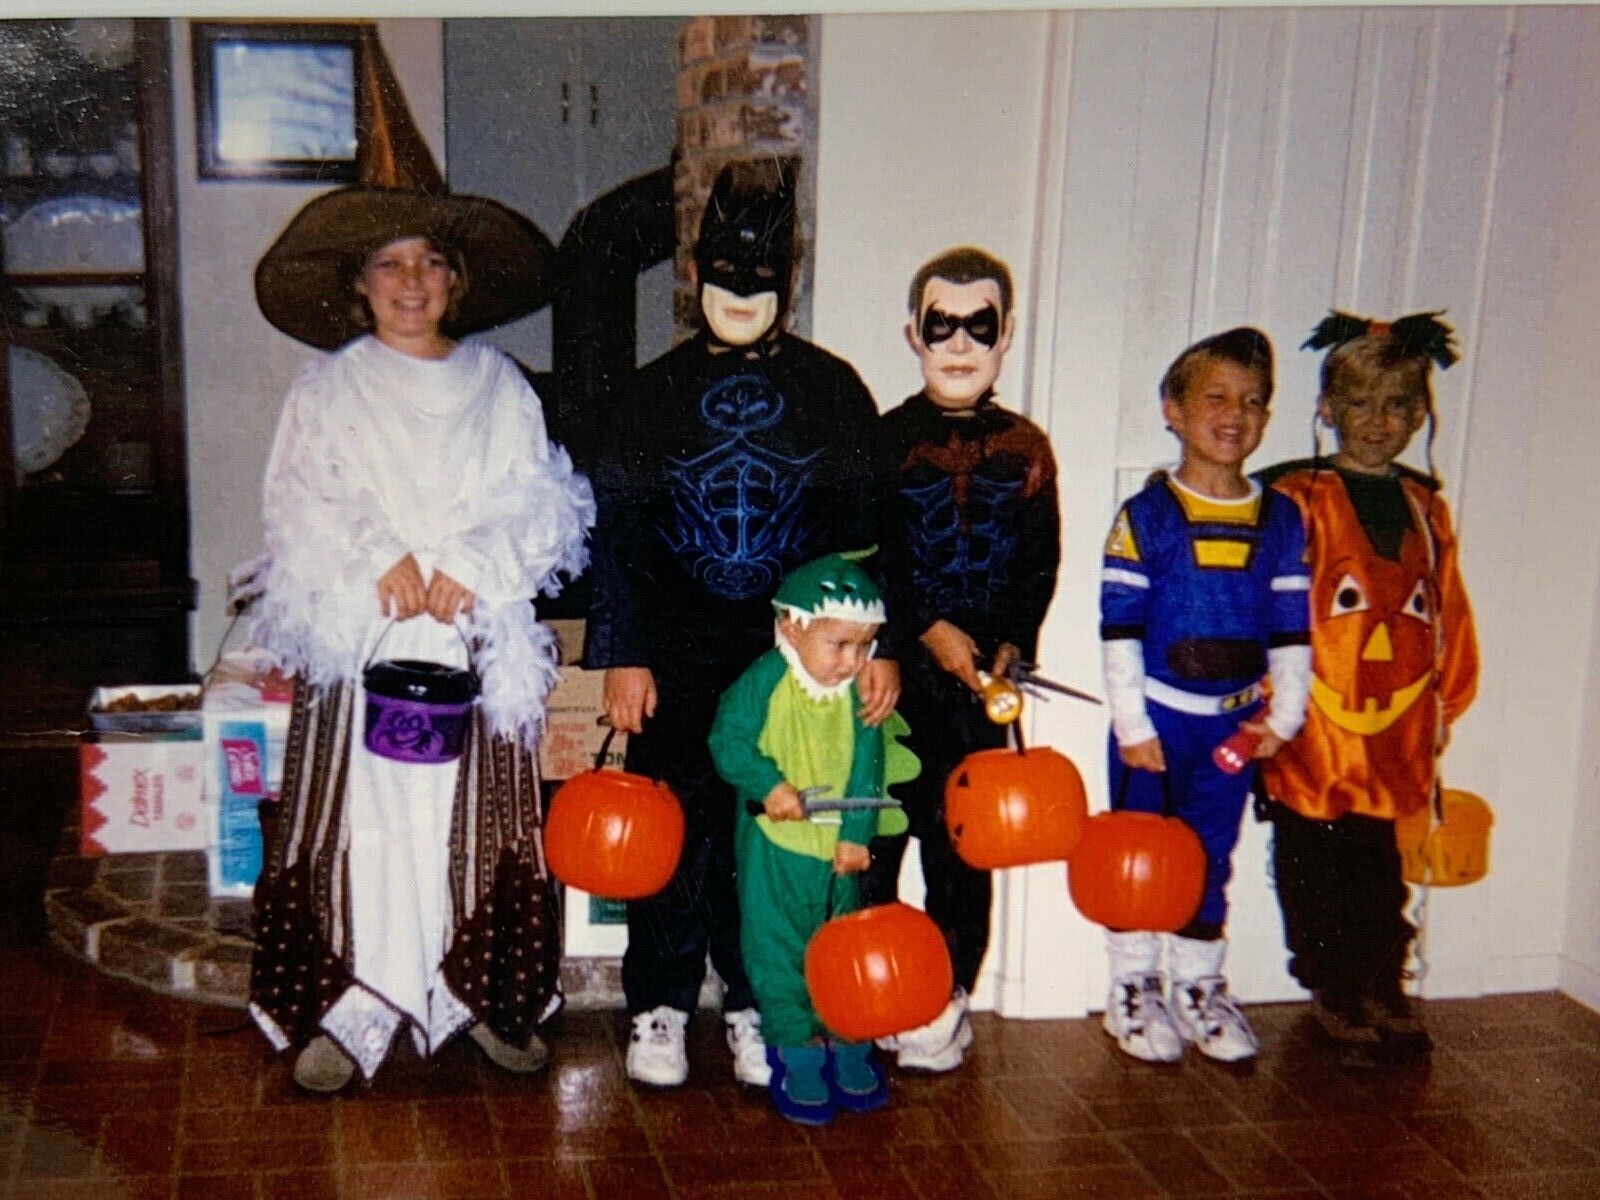 (Kb) FOUND PHOTO Photograph Snapshot 4x6 Kids Halloween Batman Costumes 